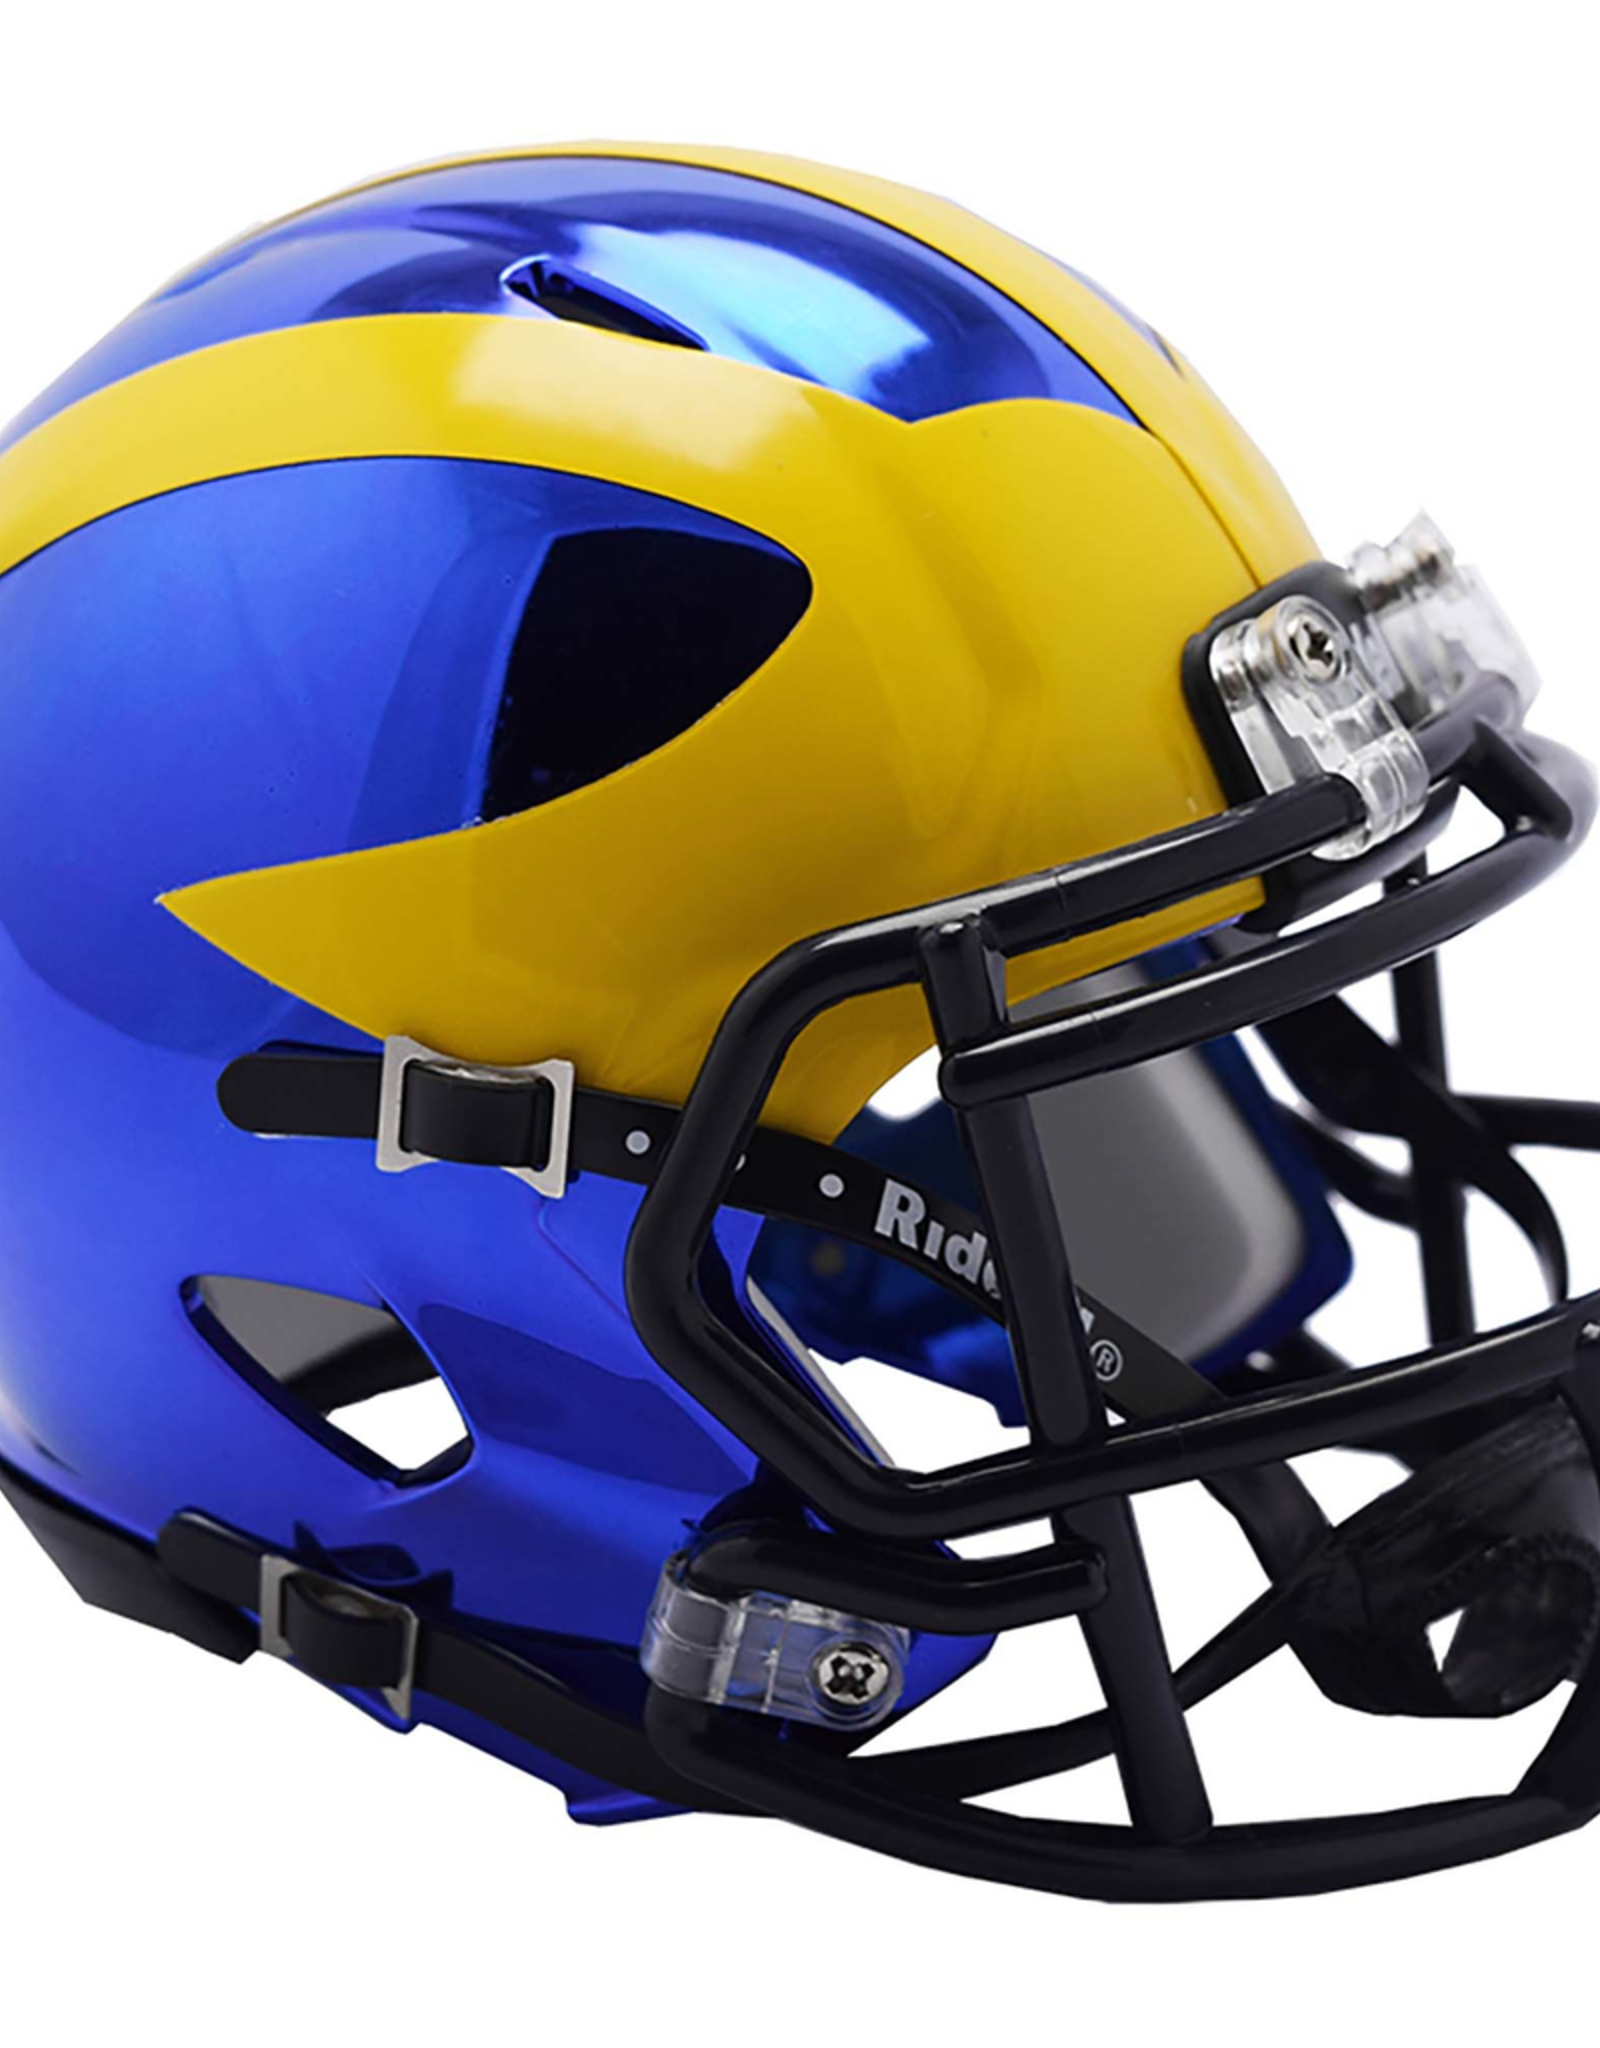 RIDDELL Michigan Wolverines Chrome Mini Speed Helmet